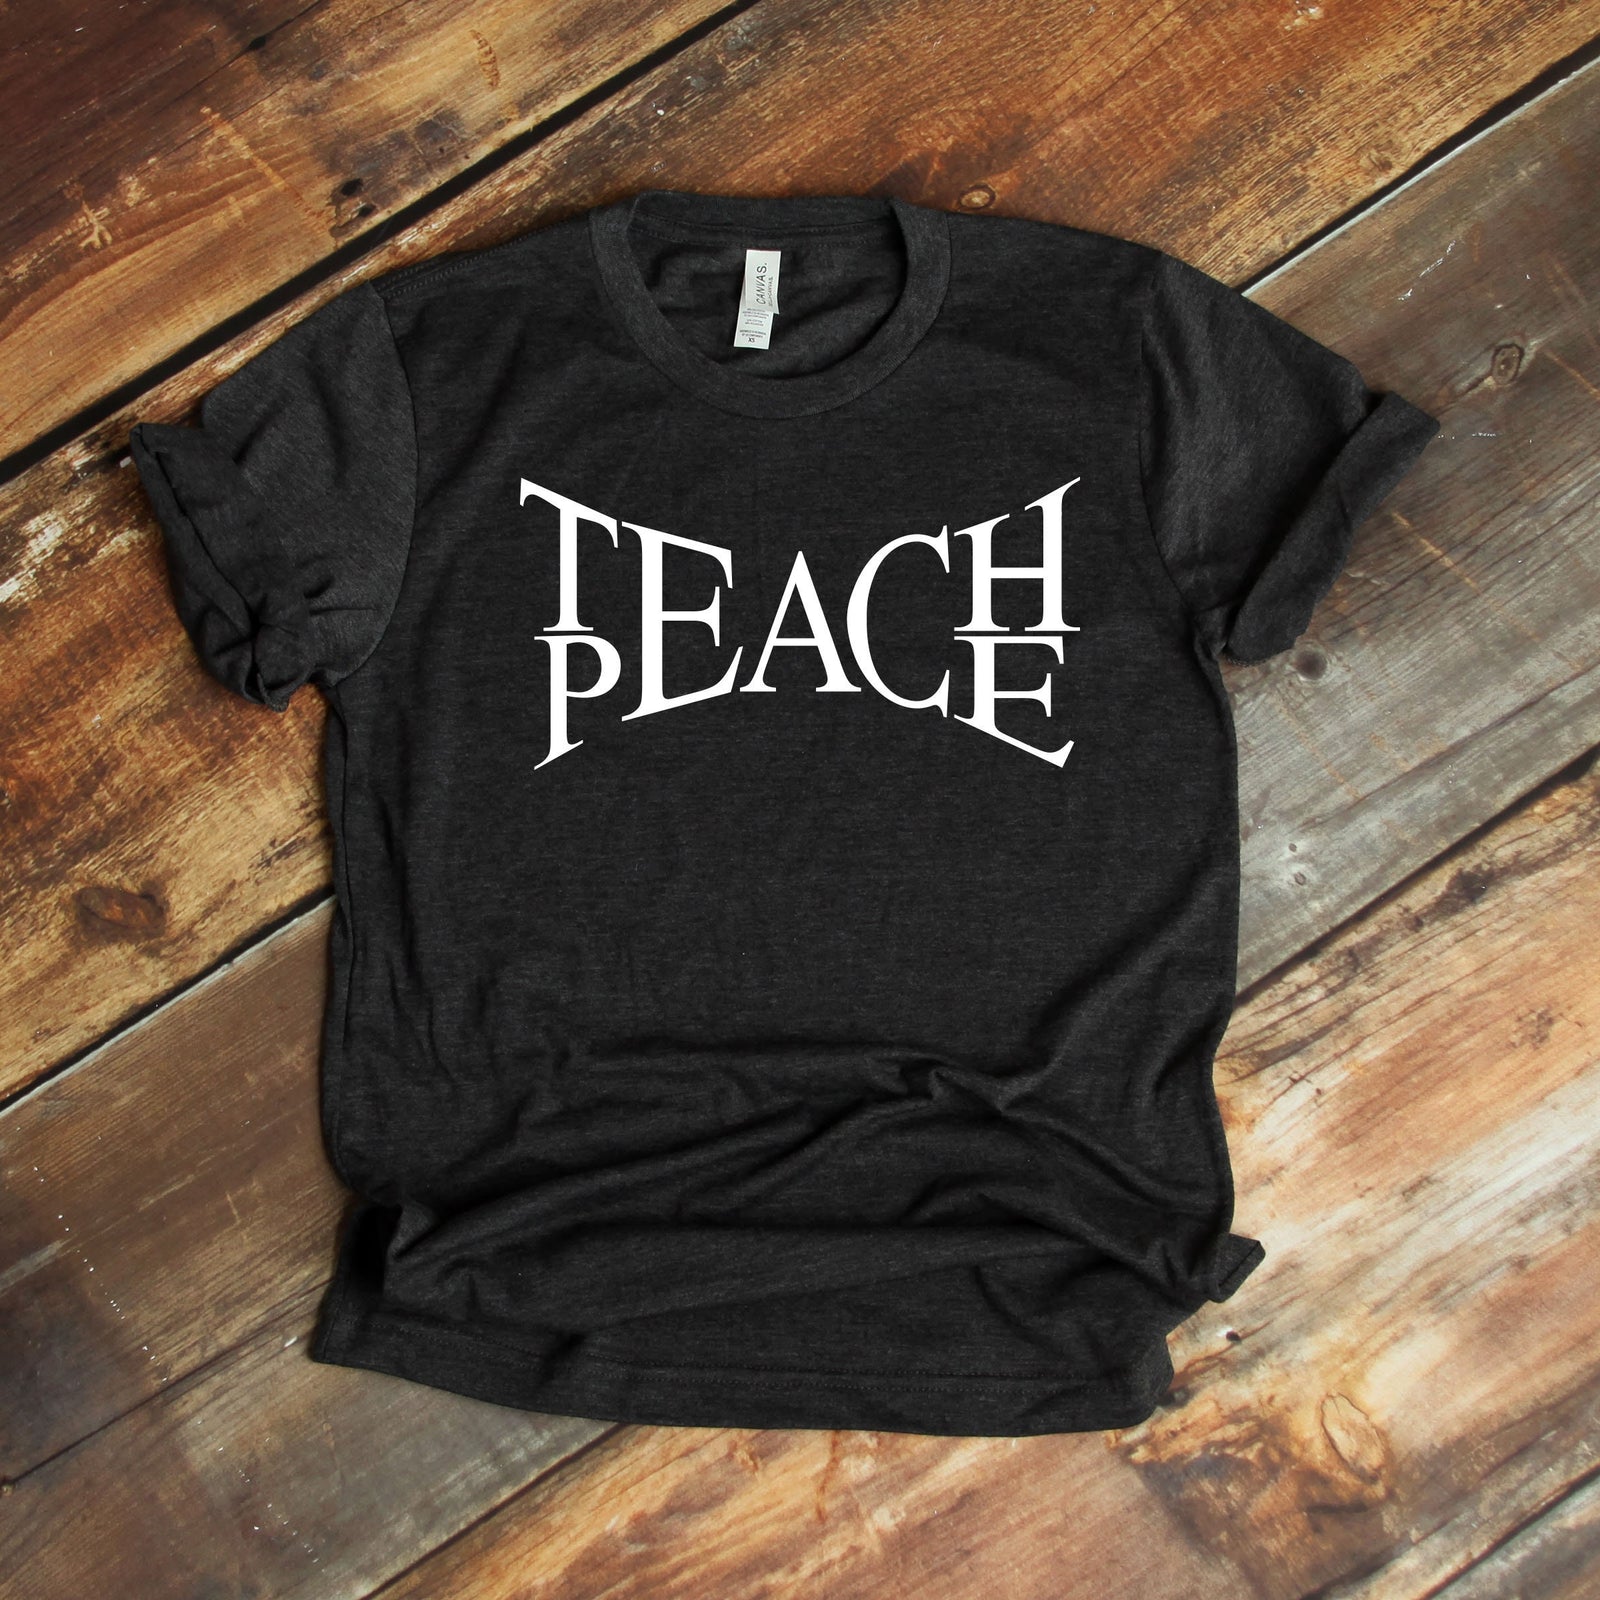 Teach Peace T Shirt - Teacher Shirts - Be Kind Shirts